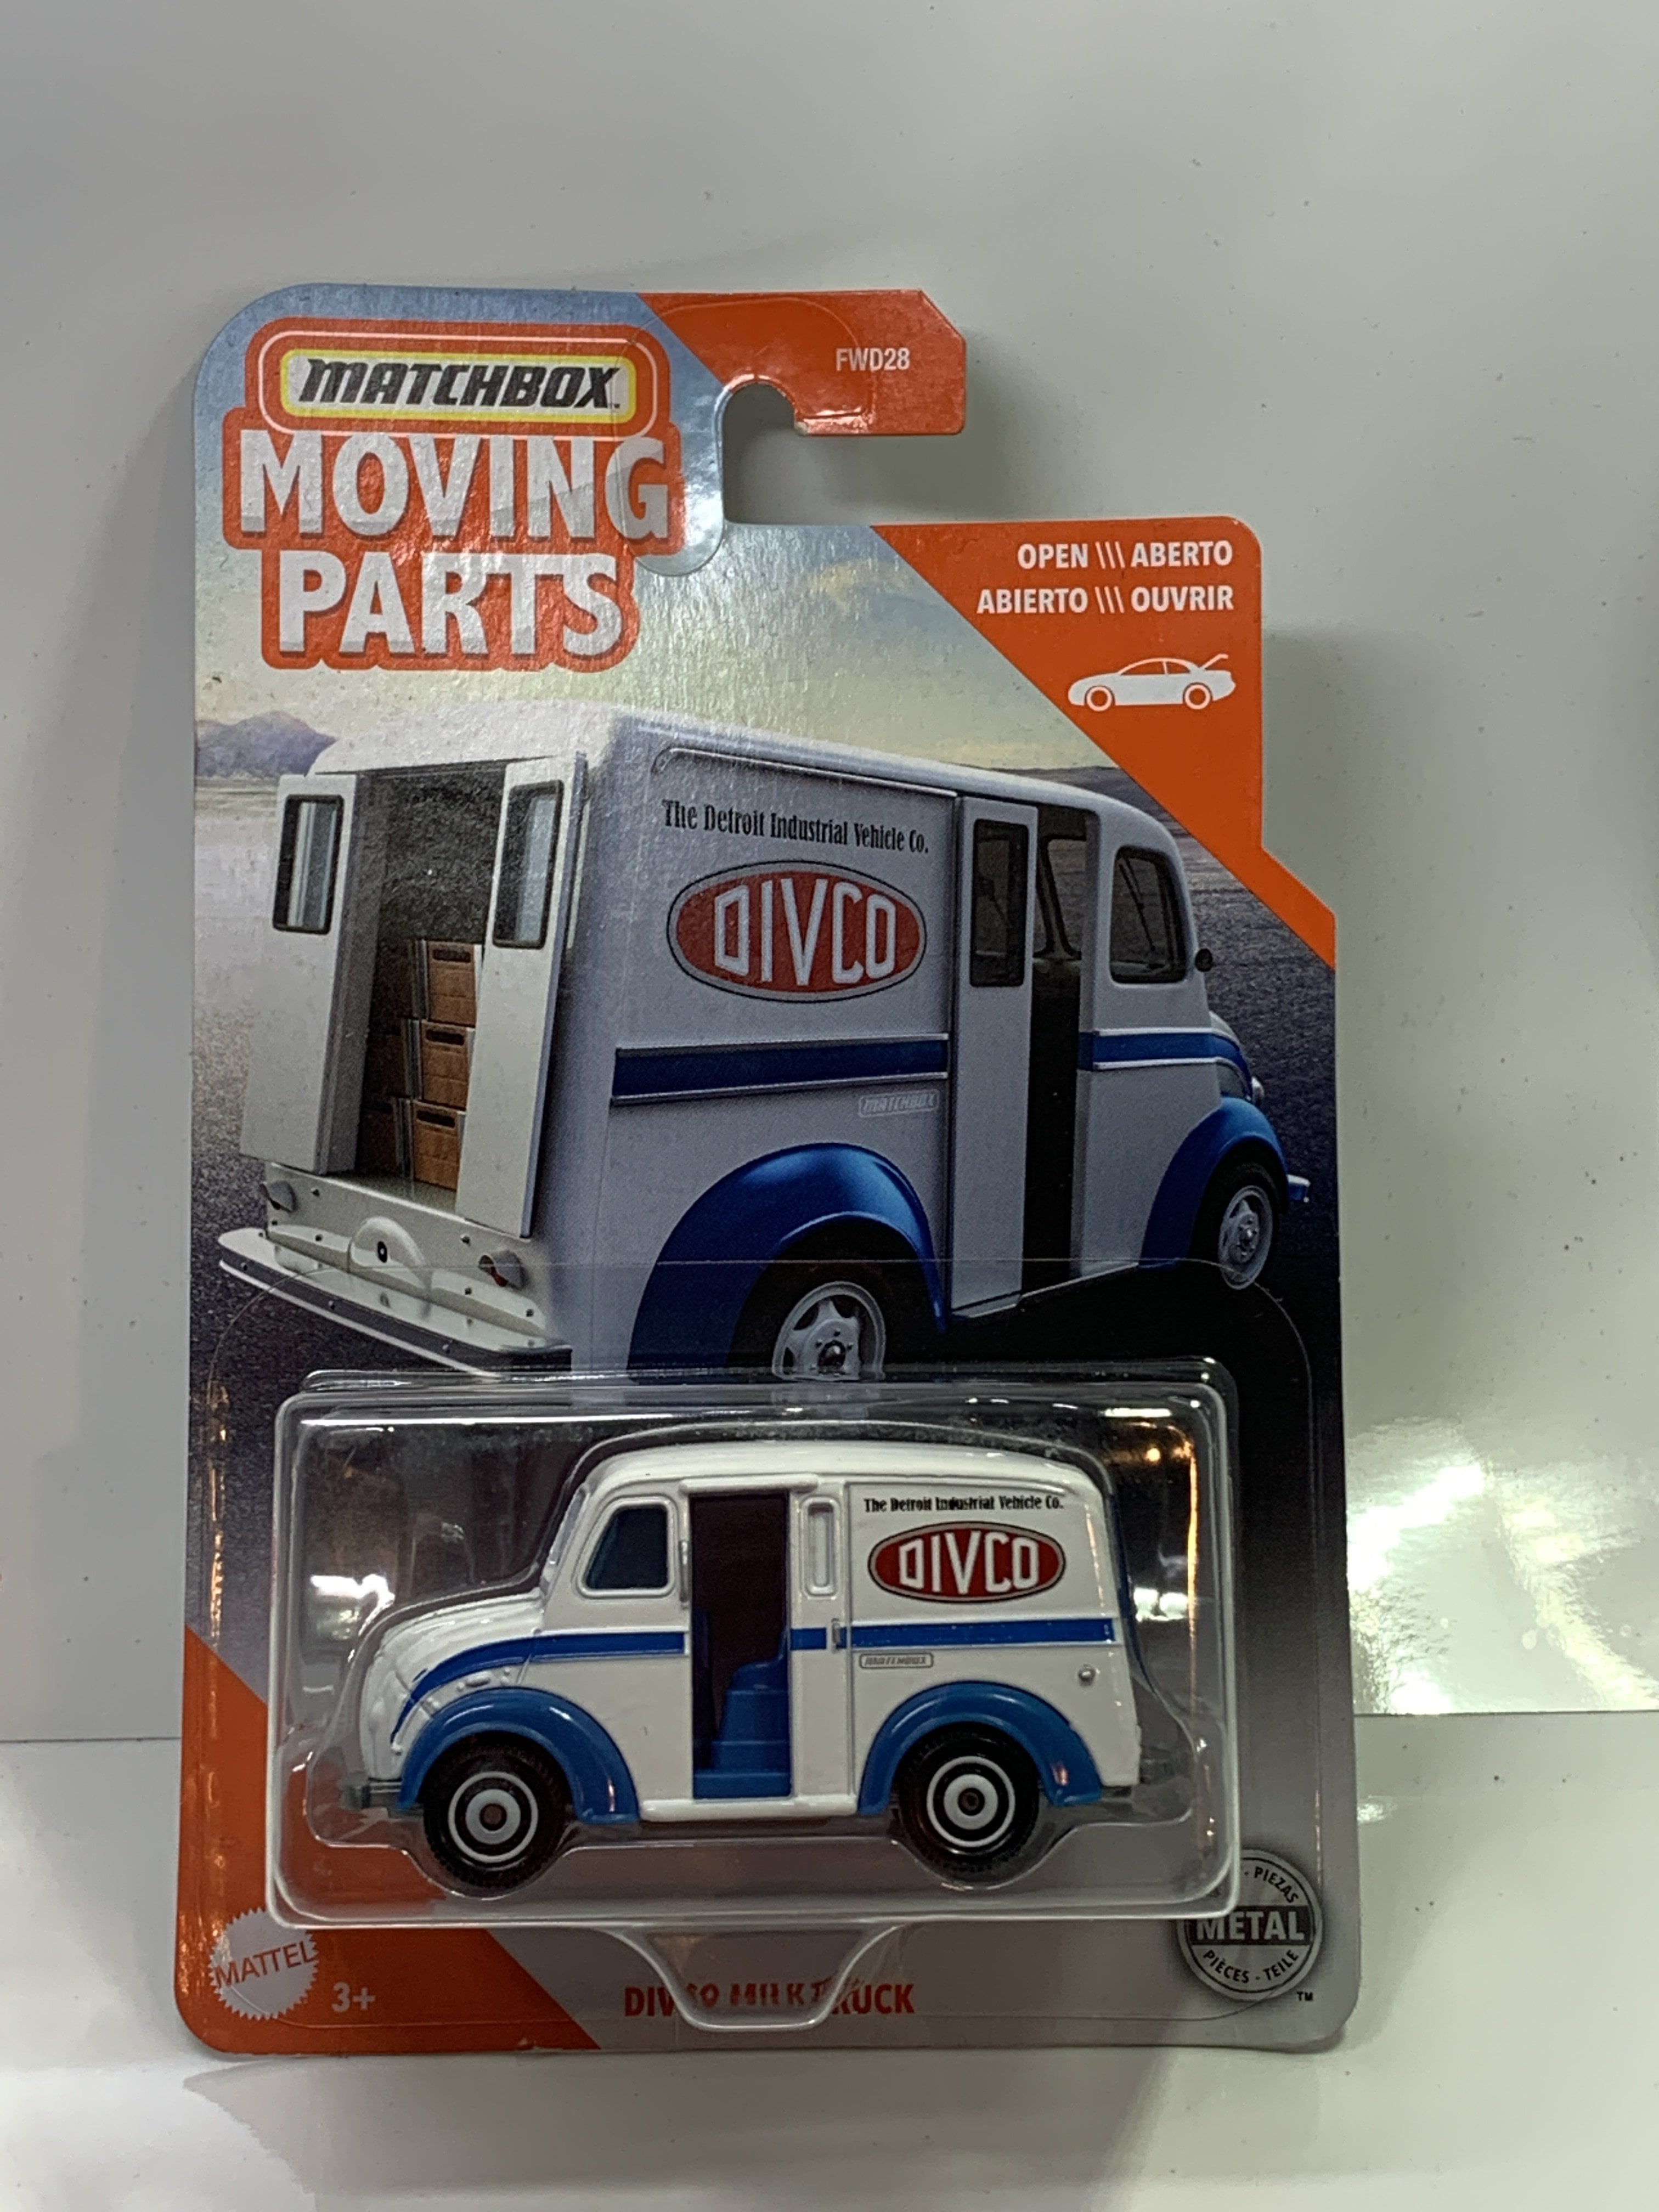 Matchbox Moving Parts Divco Milk Truck Lot Of 2 1:64 